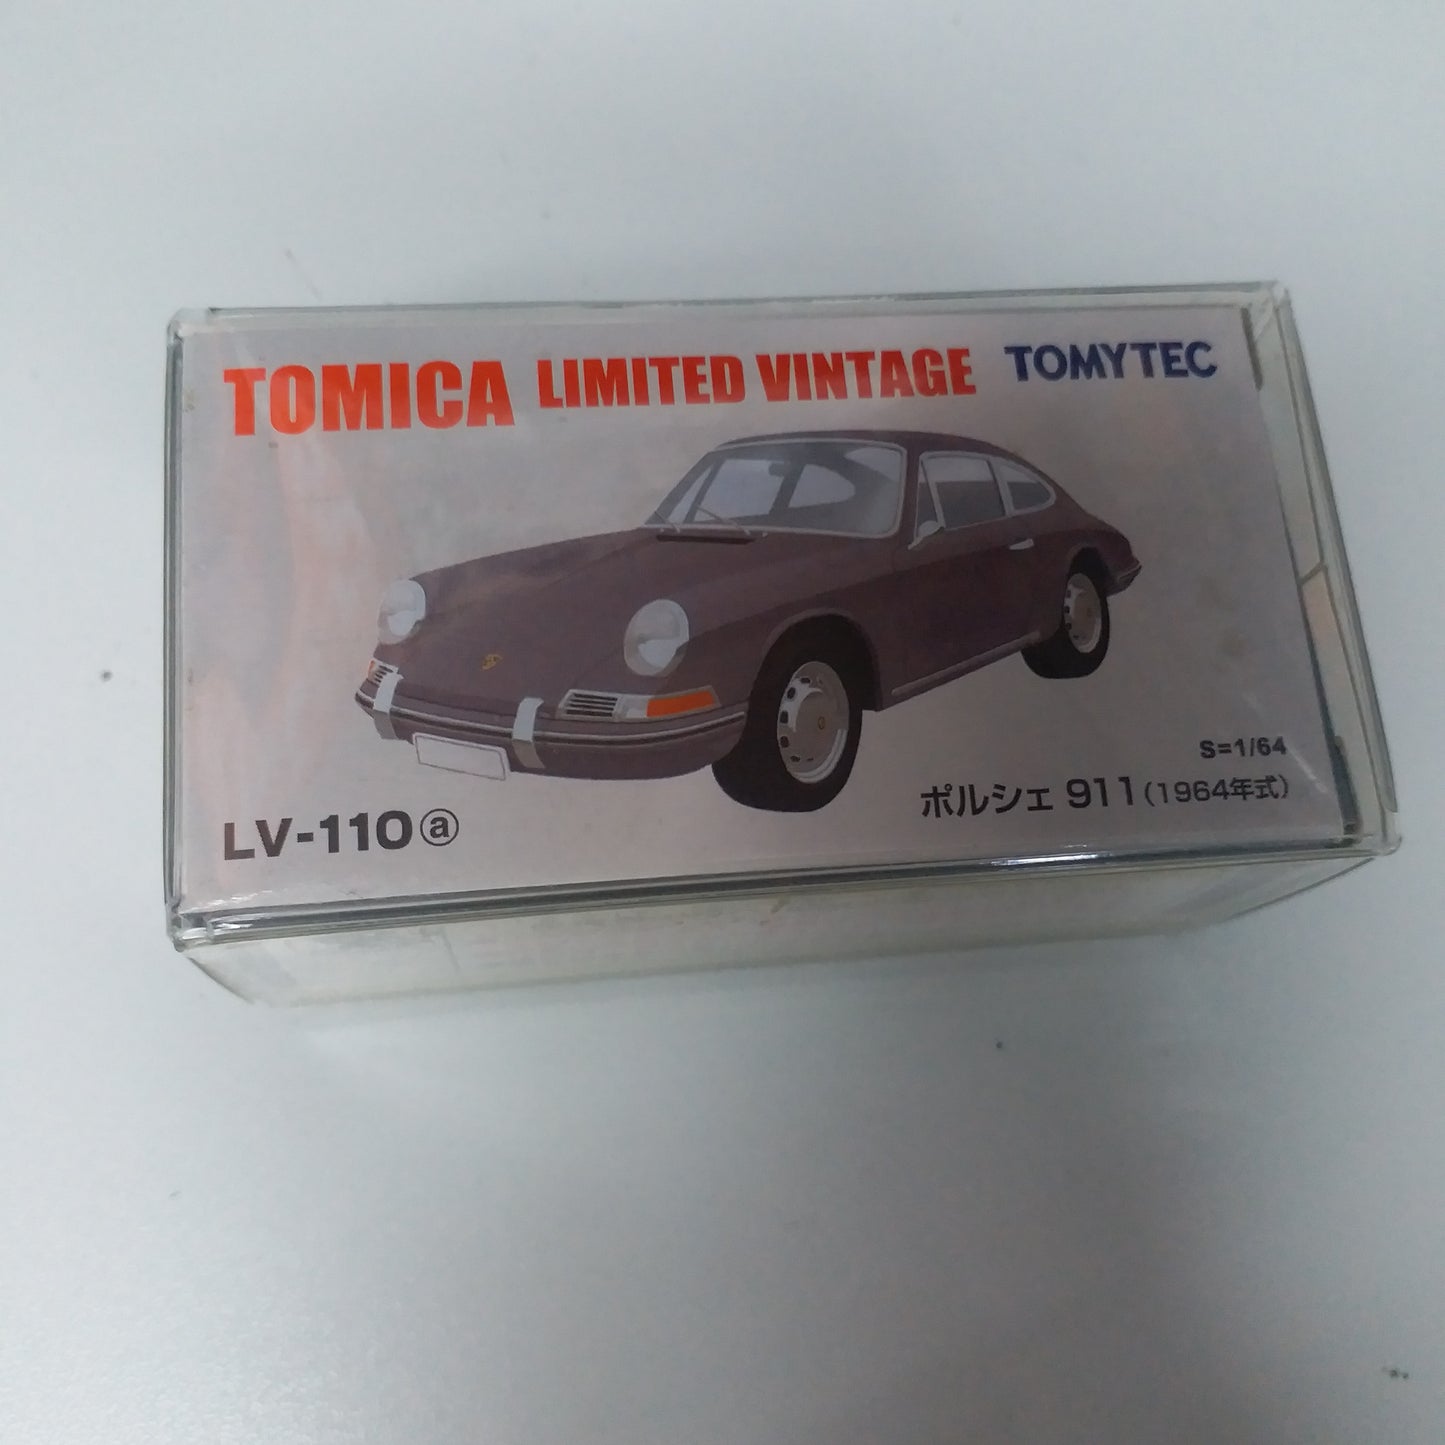 Tomica Limited Vintage LV-110a Porsche 911